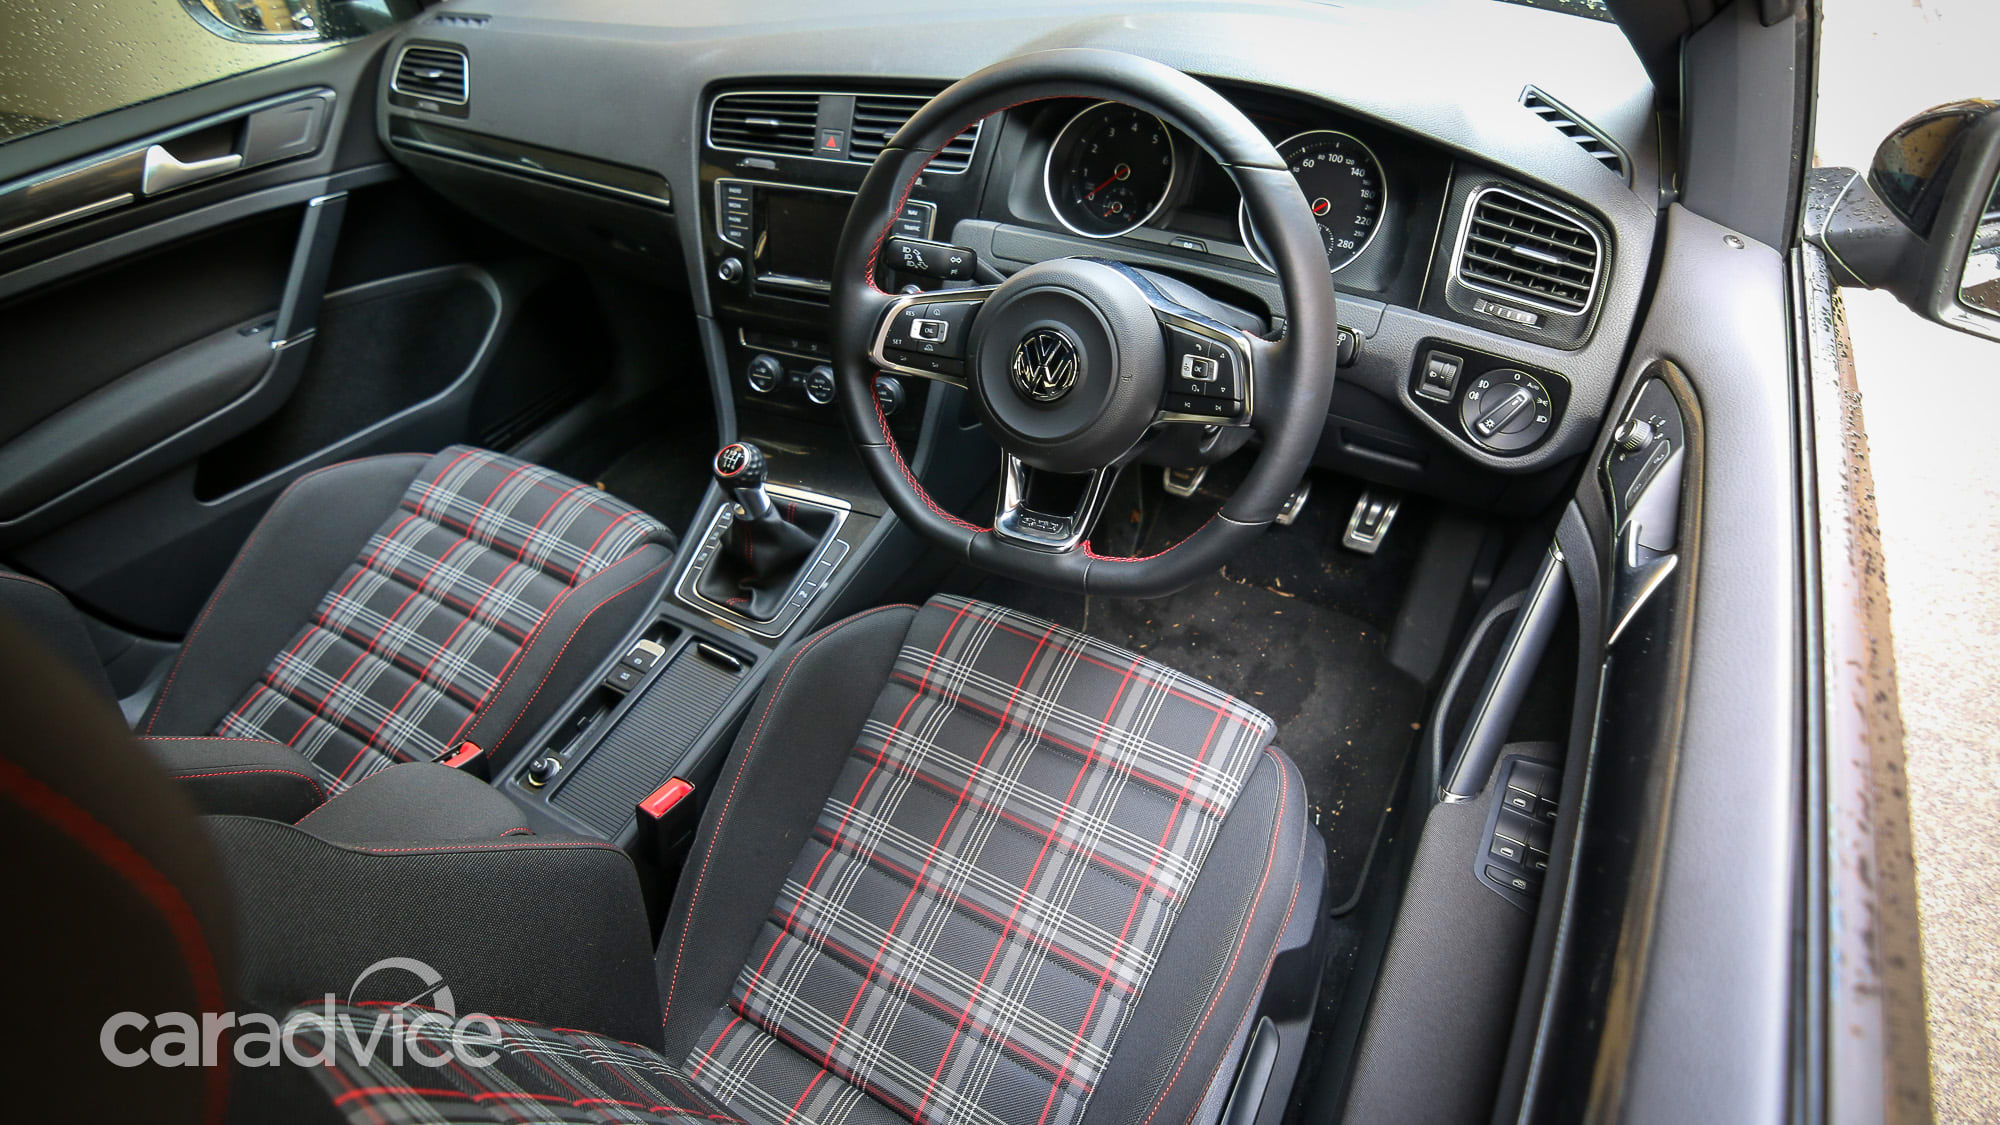 Volkswagen Golf GTI gearbox comparison : Manual v DSG | CarAdvice